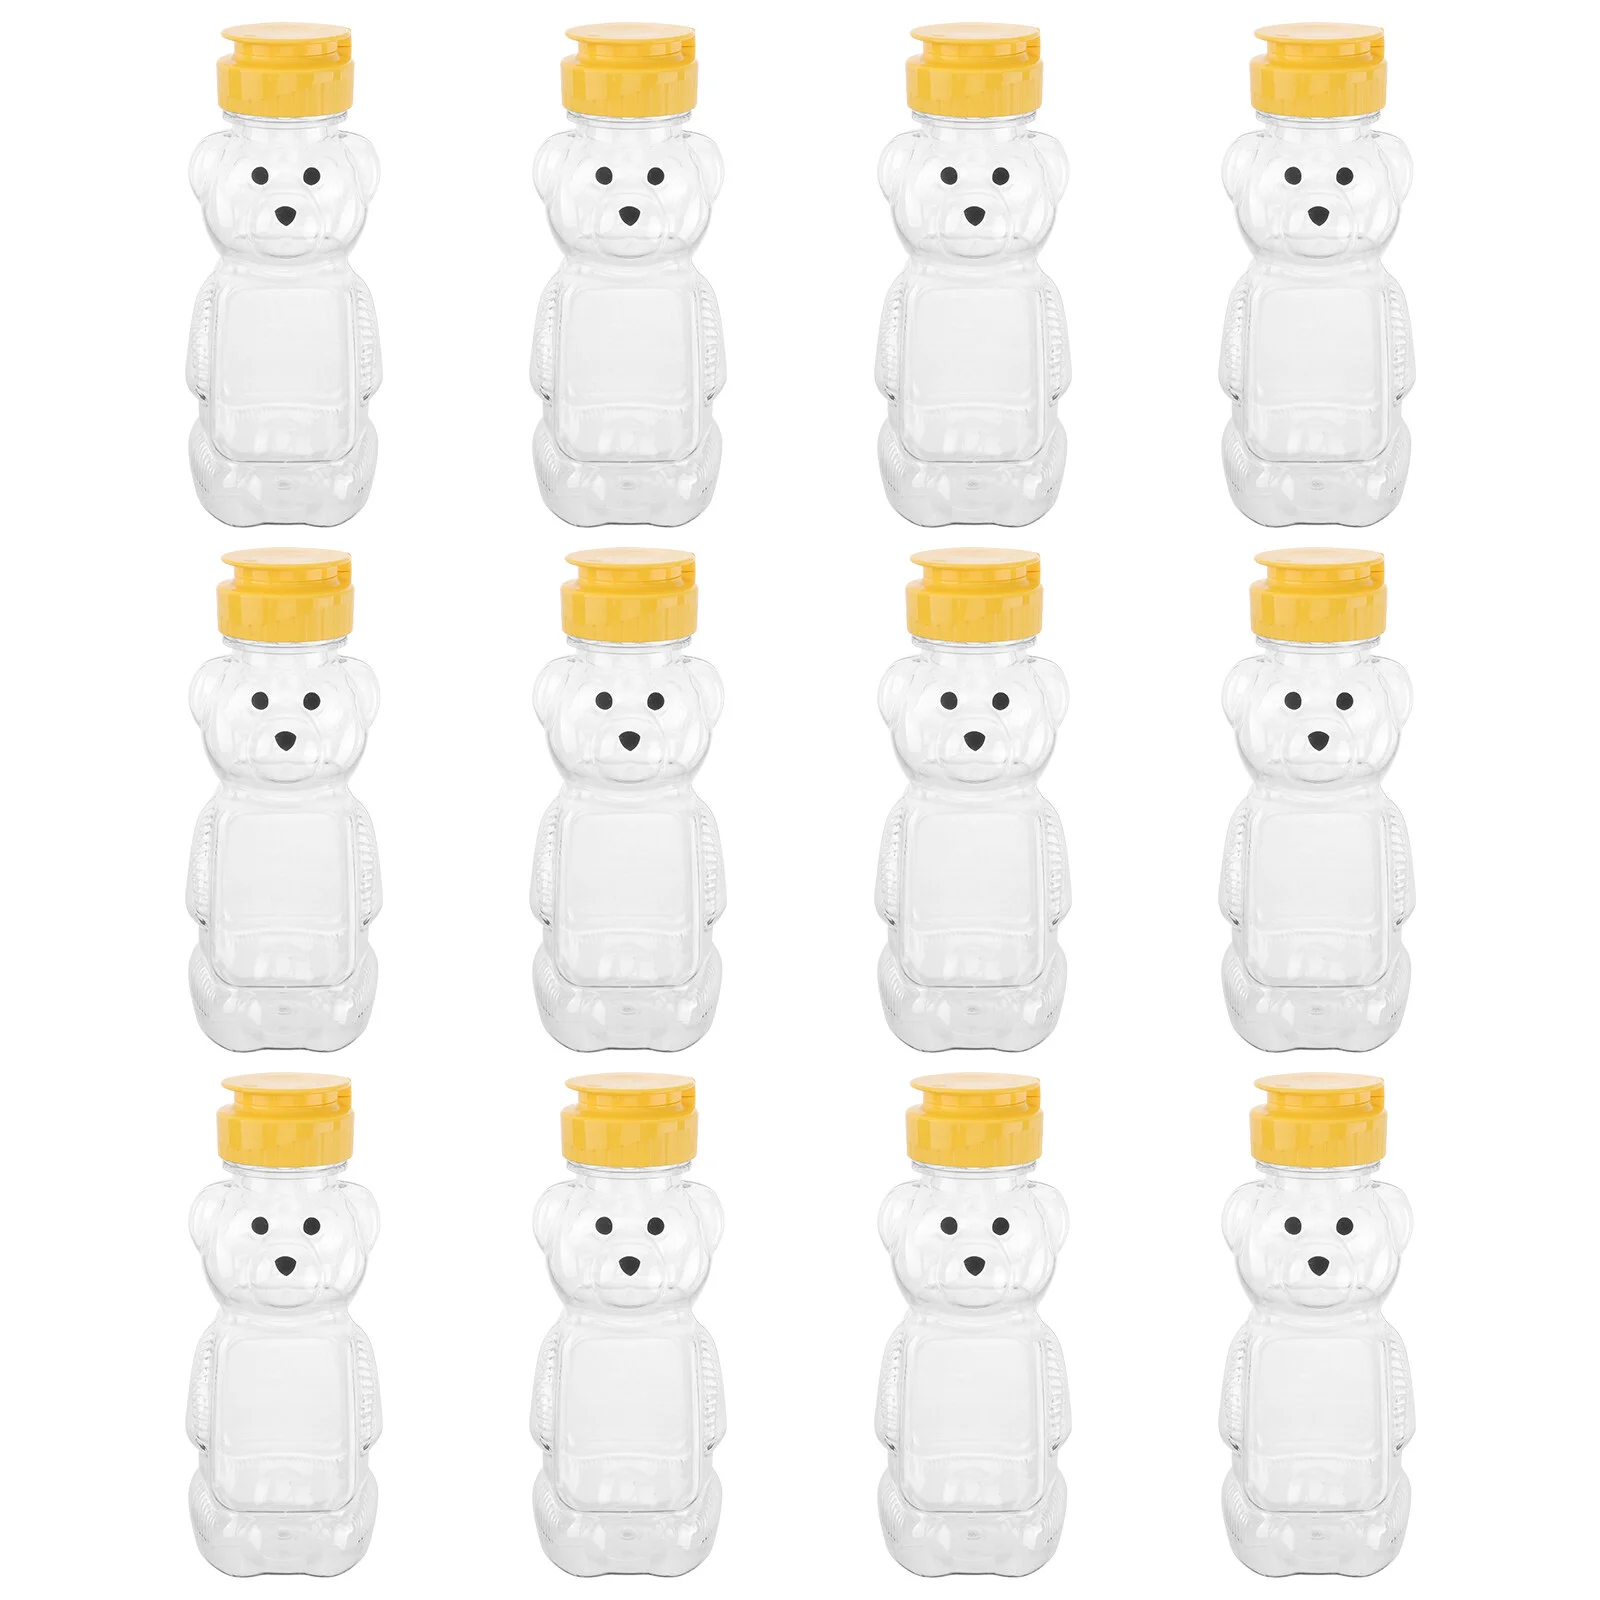 

Bear Bottle, 12pcs Plastic To Go Containers Empty Honey Bottles with Lid Cap 240ml Squeeze Condiment Sauce Mustard Jam Dispenser